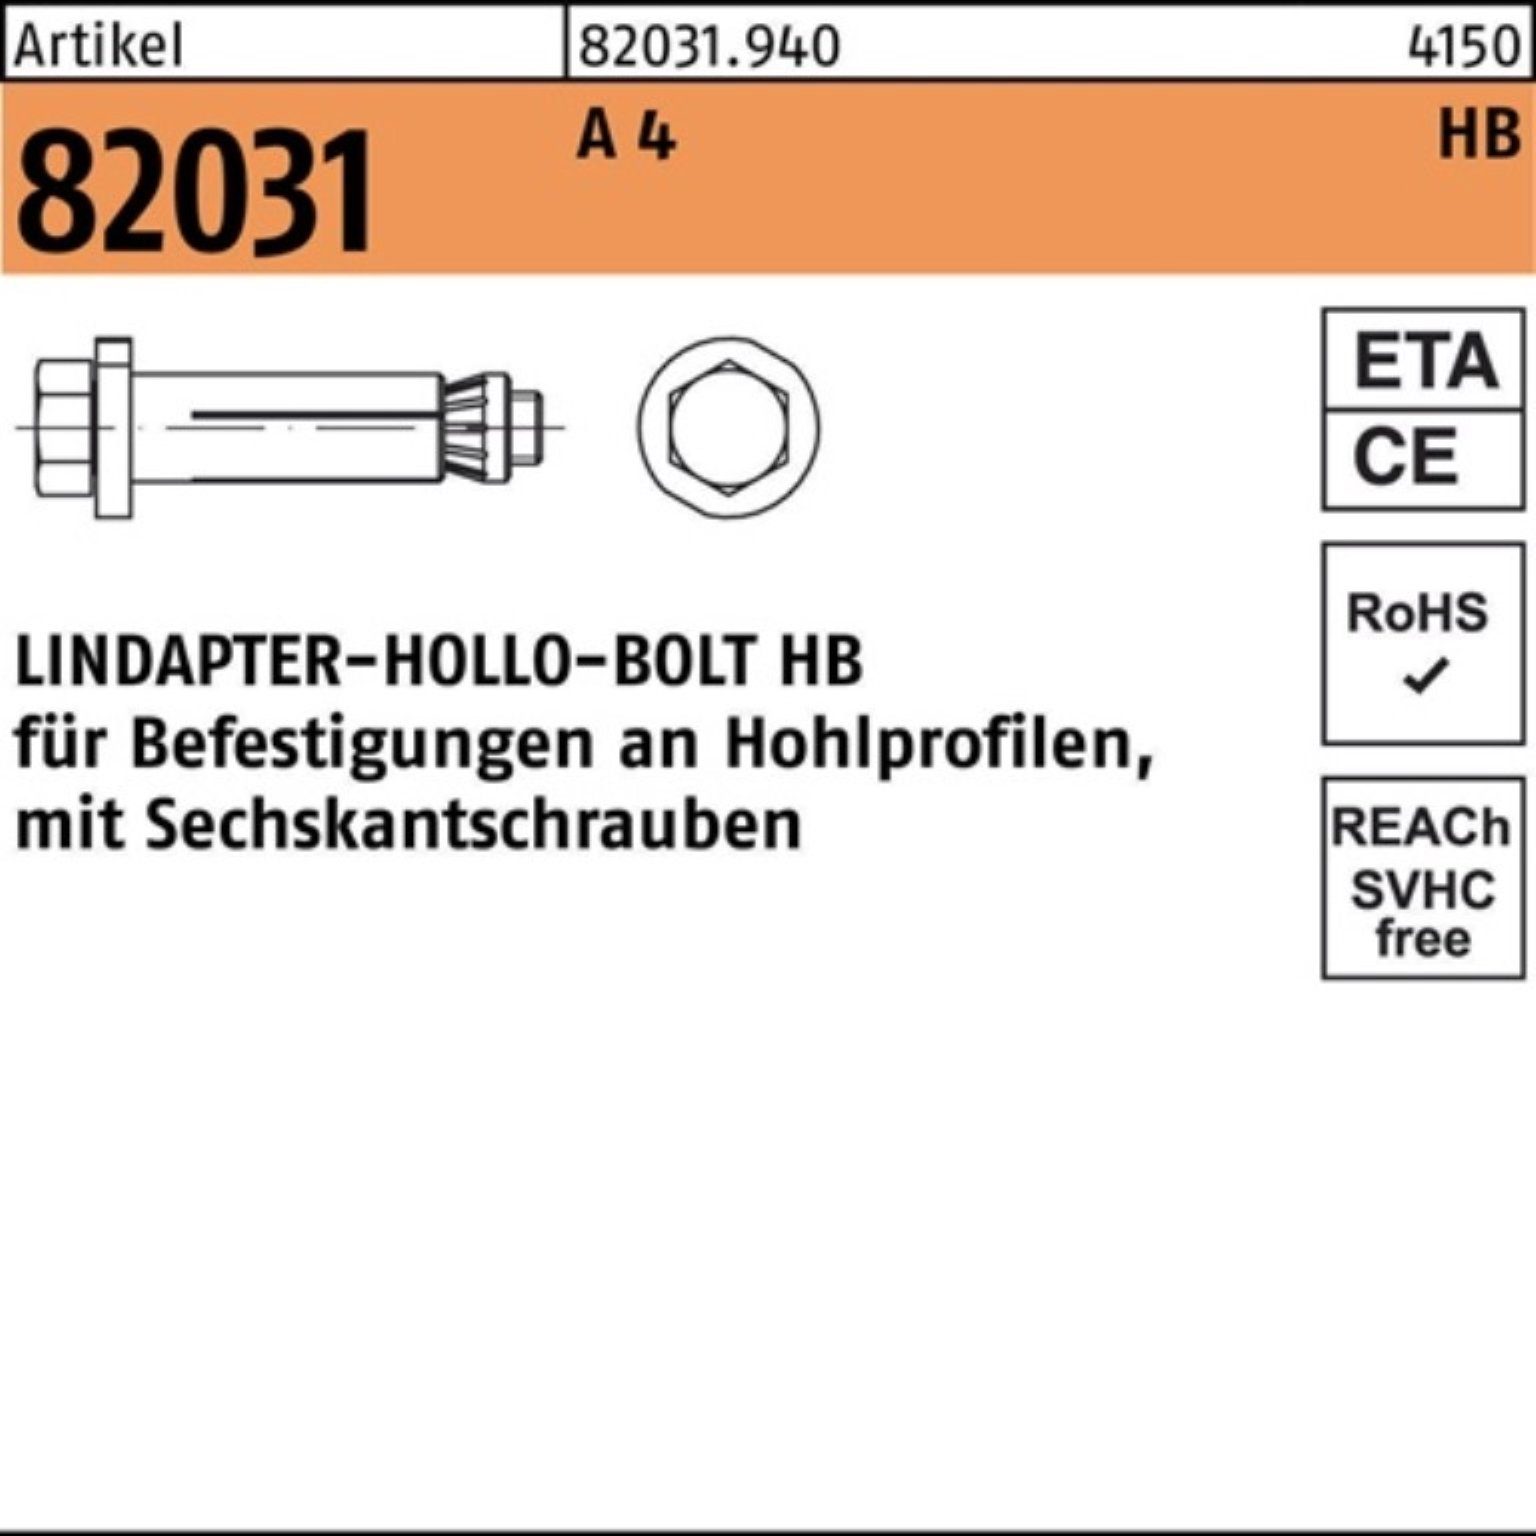 A Hohlraumdübel R 6-ktschraube HB Lindapter Hohlraumdübel 1 82031 4 20-3 (150/86) Pack 100er